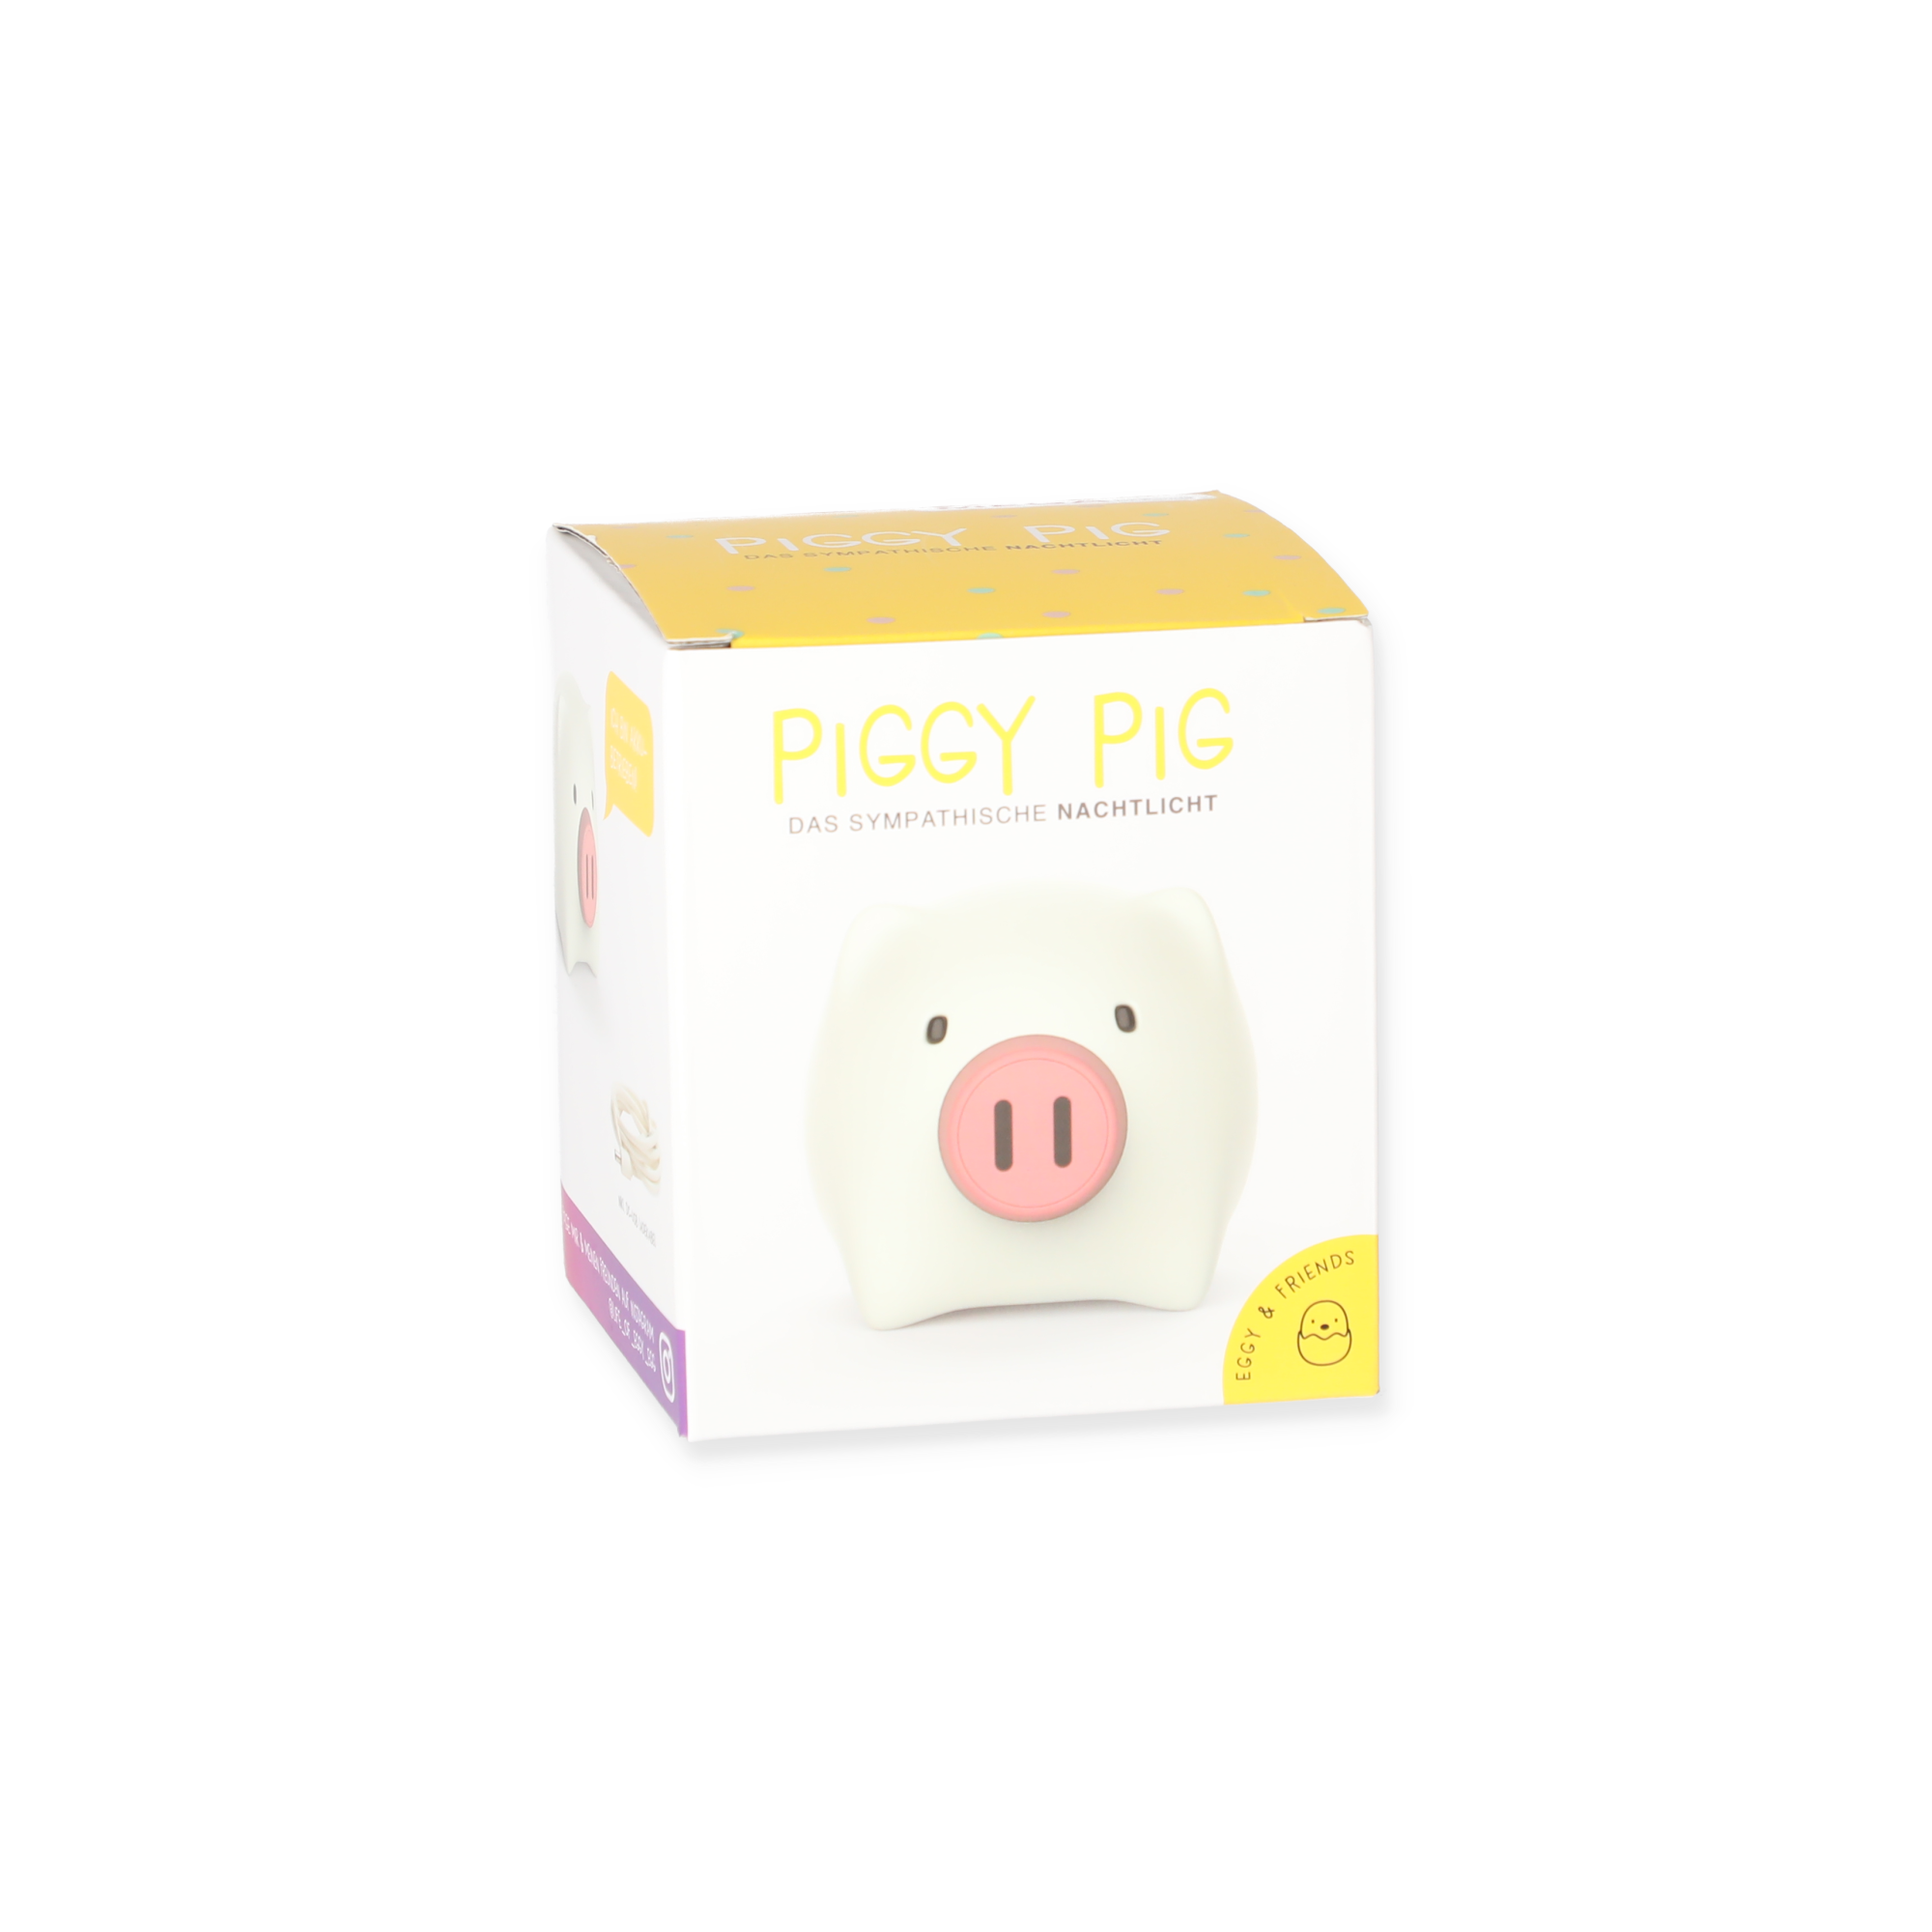 Nachtlicht 'Piggy Pig' dimmbar + product picture